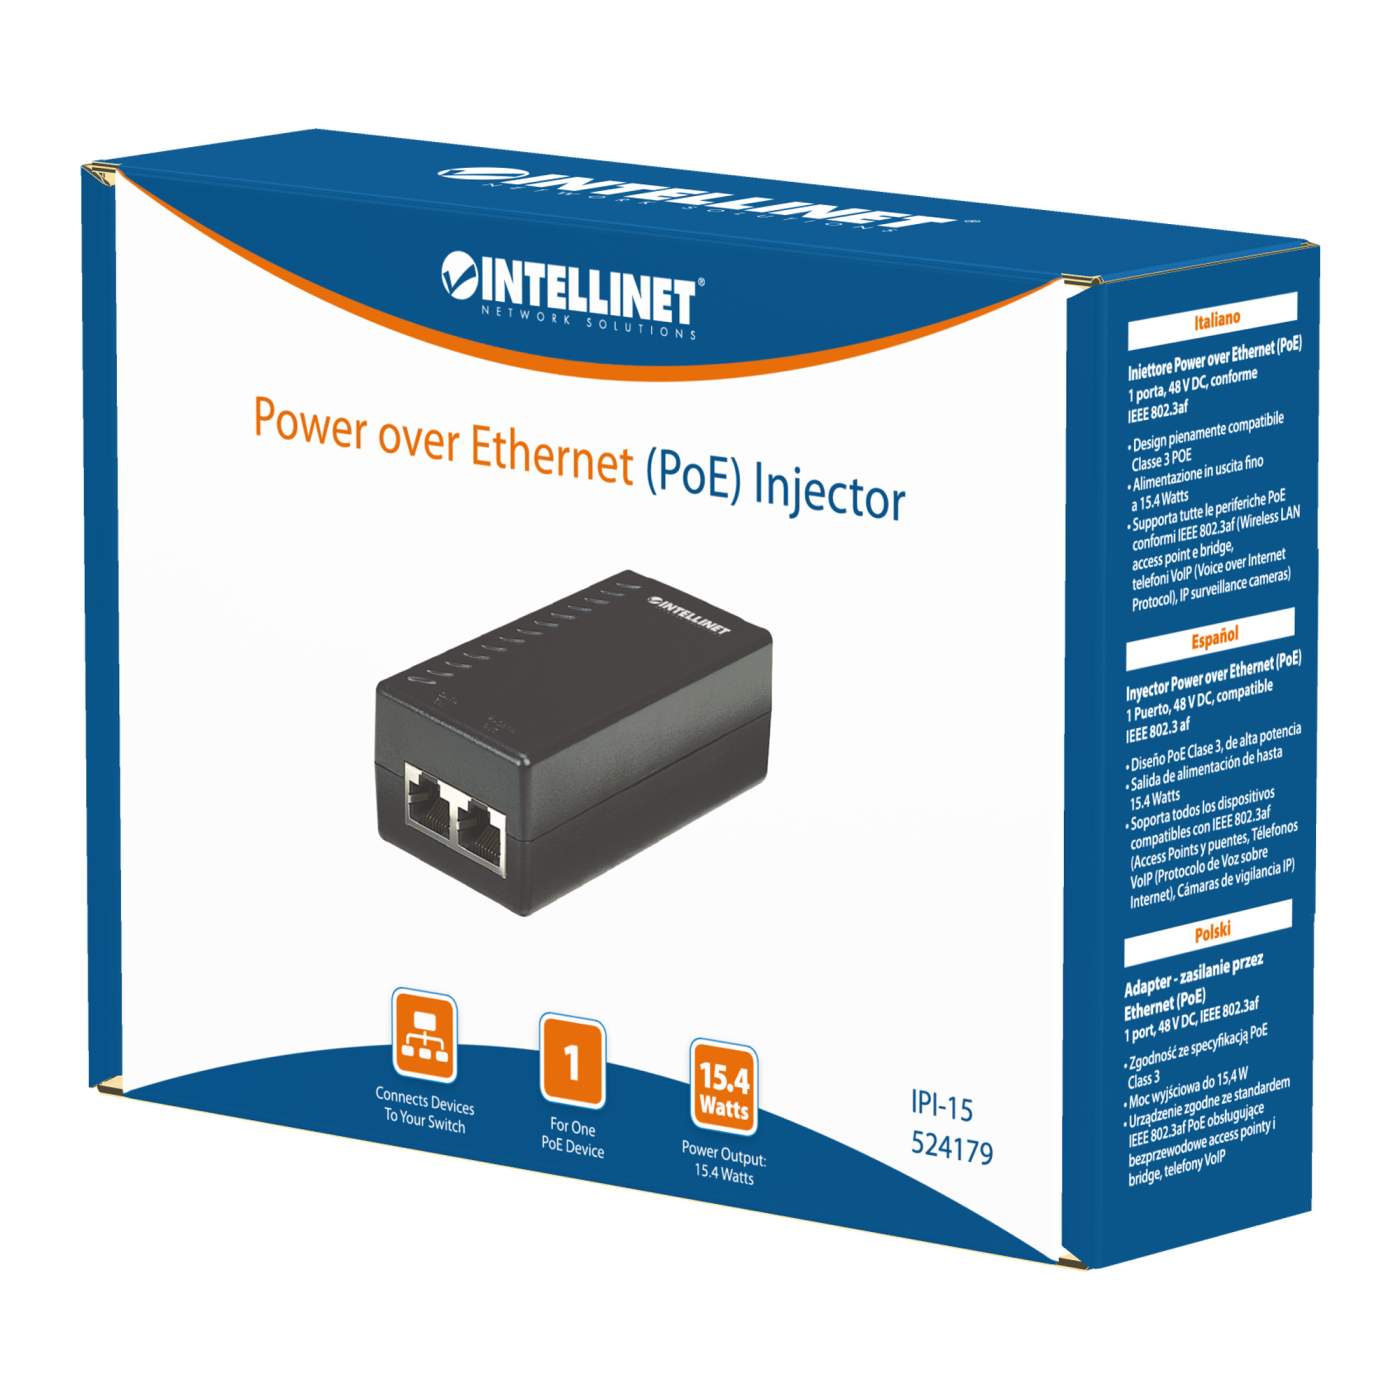 Power over Ethernet (PoE-) Injektor Packaging Image 2